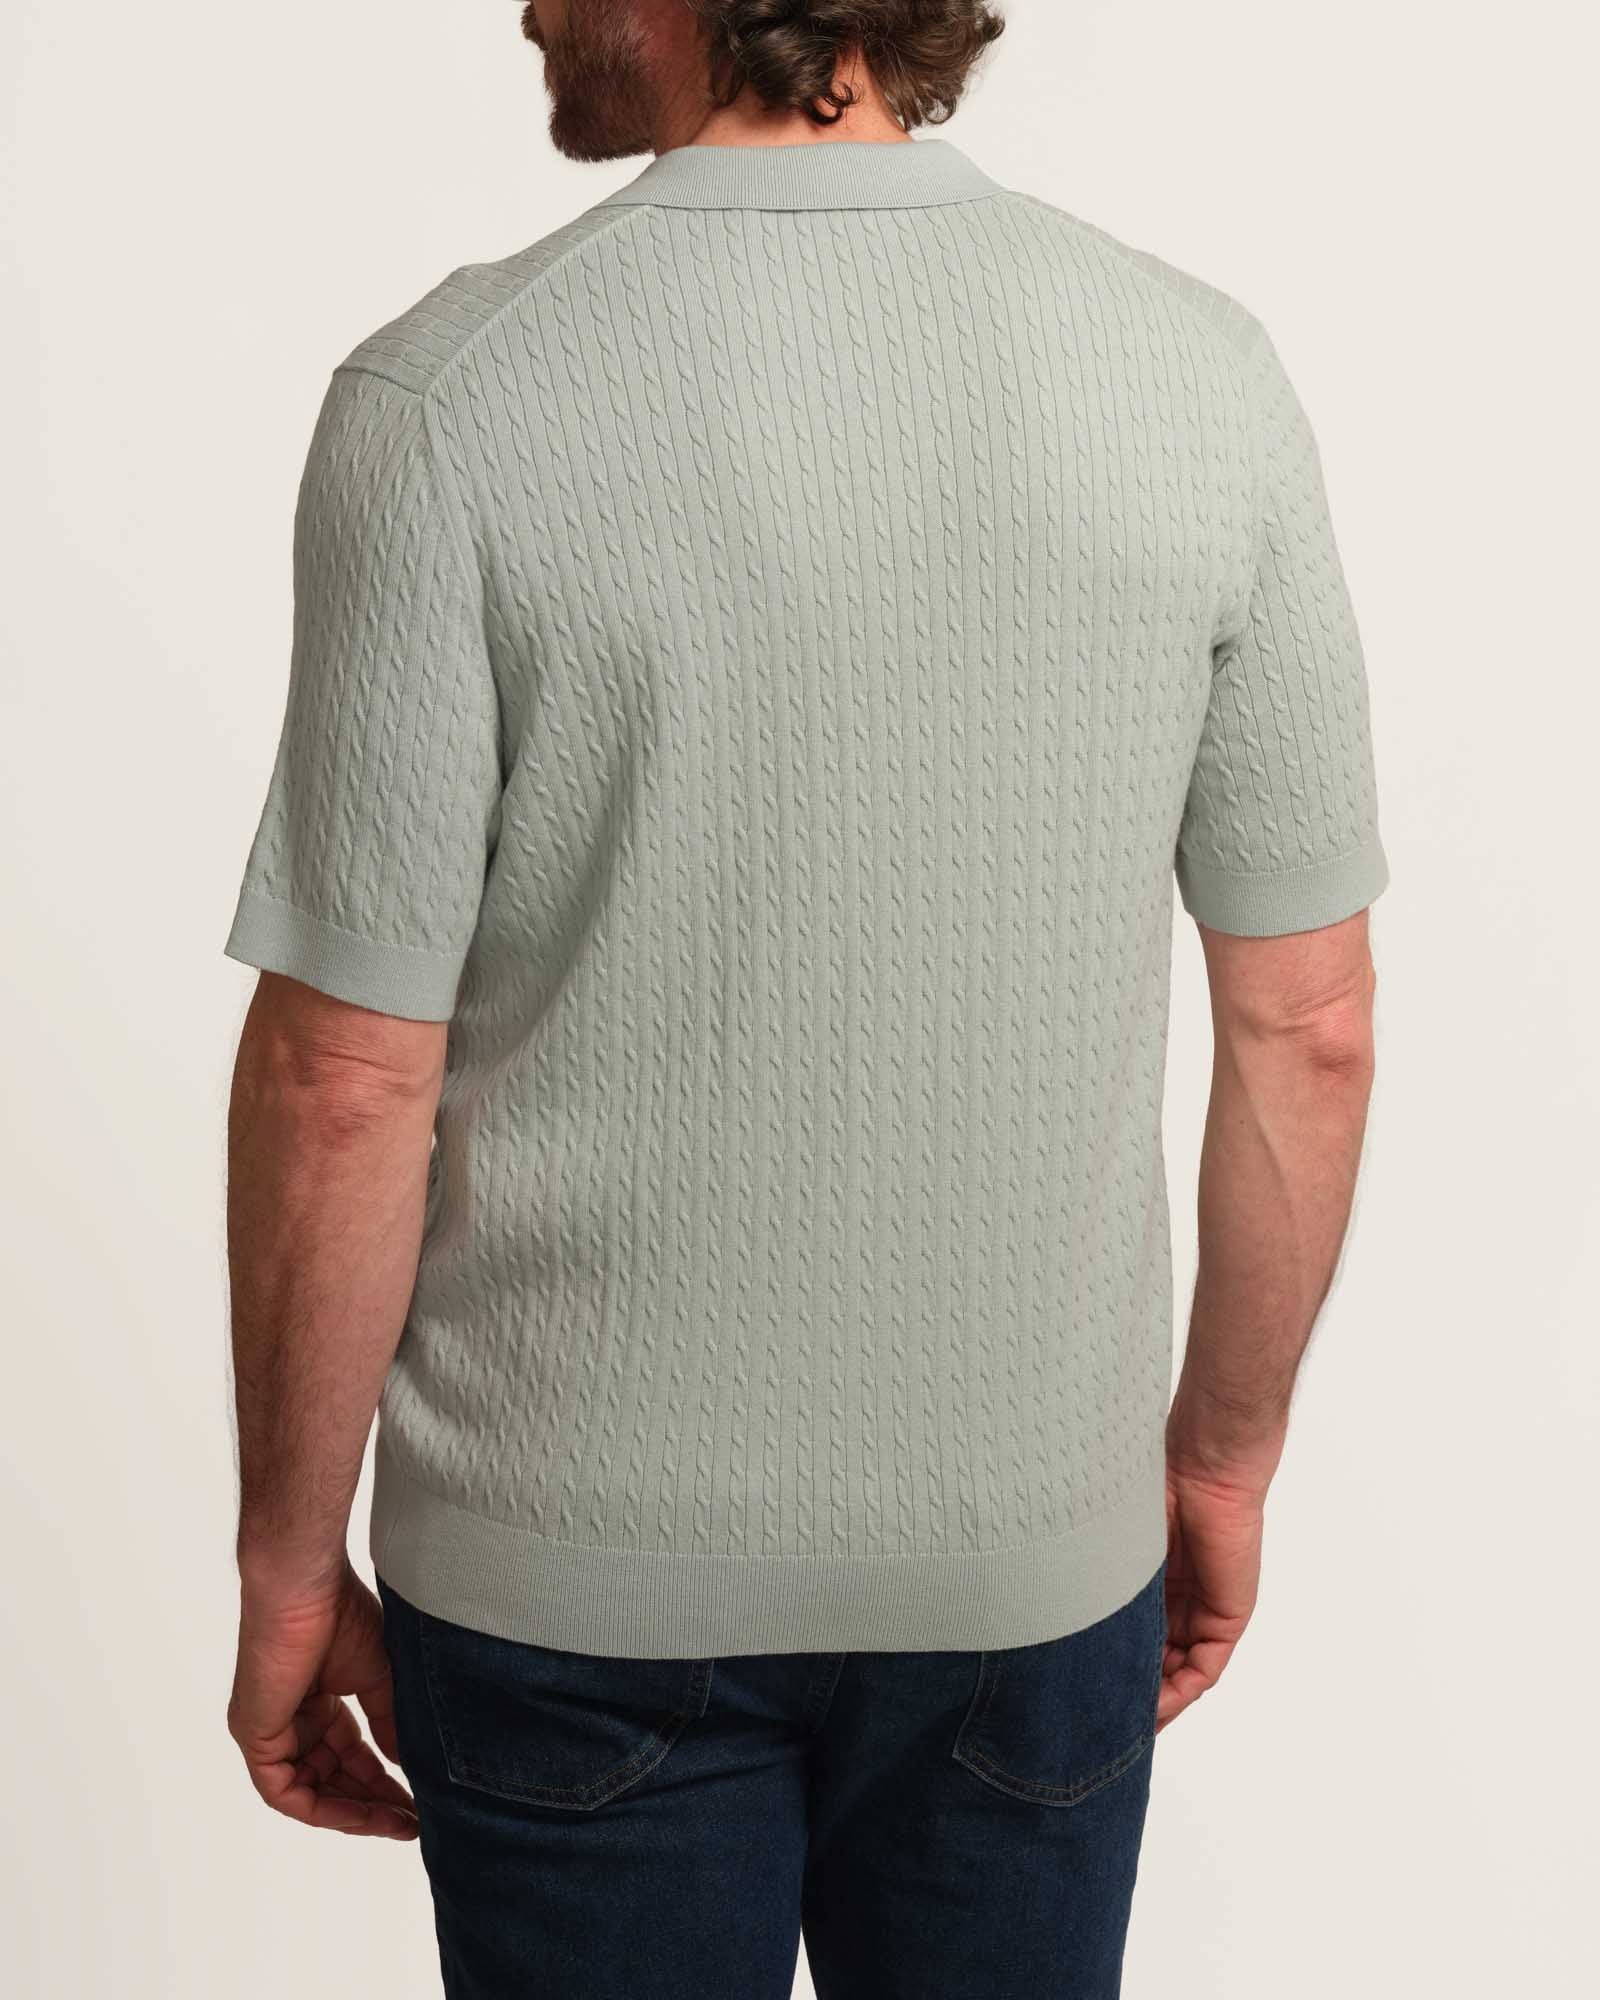 Elie Tahari Men's Johnny Collar Micro Cable Sweater Polo | JANE + MERCER